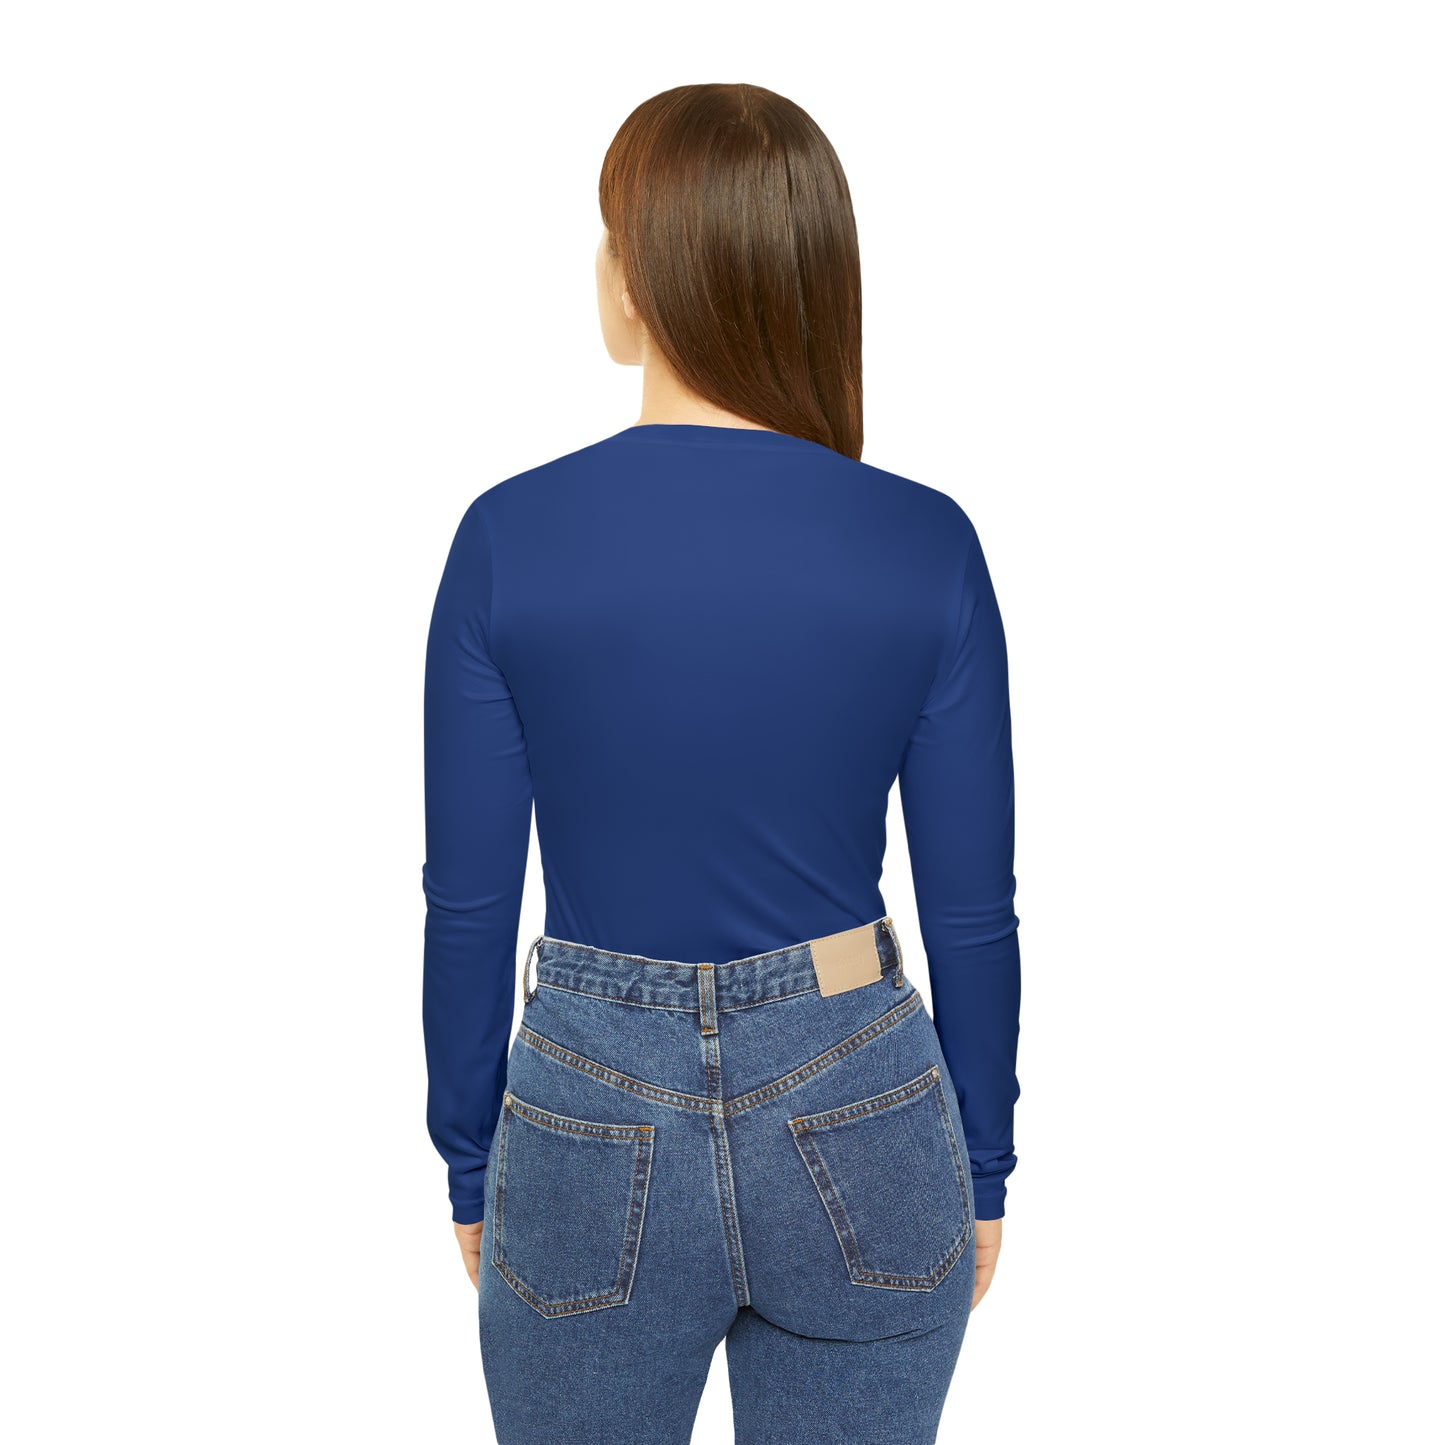 Premium Crap II Women's Long Sleeve V-neck Shirt - Dark Blue